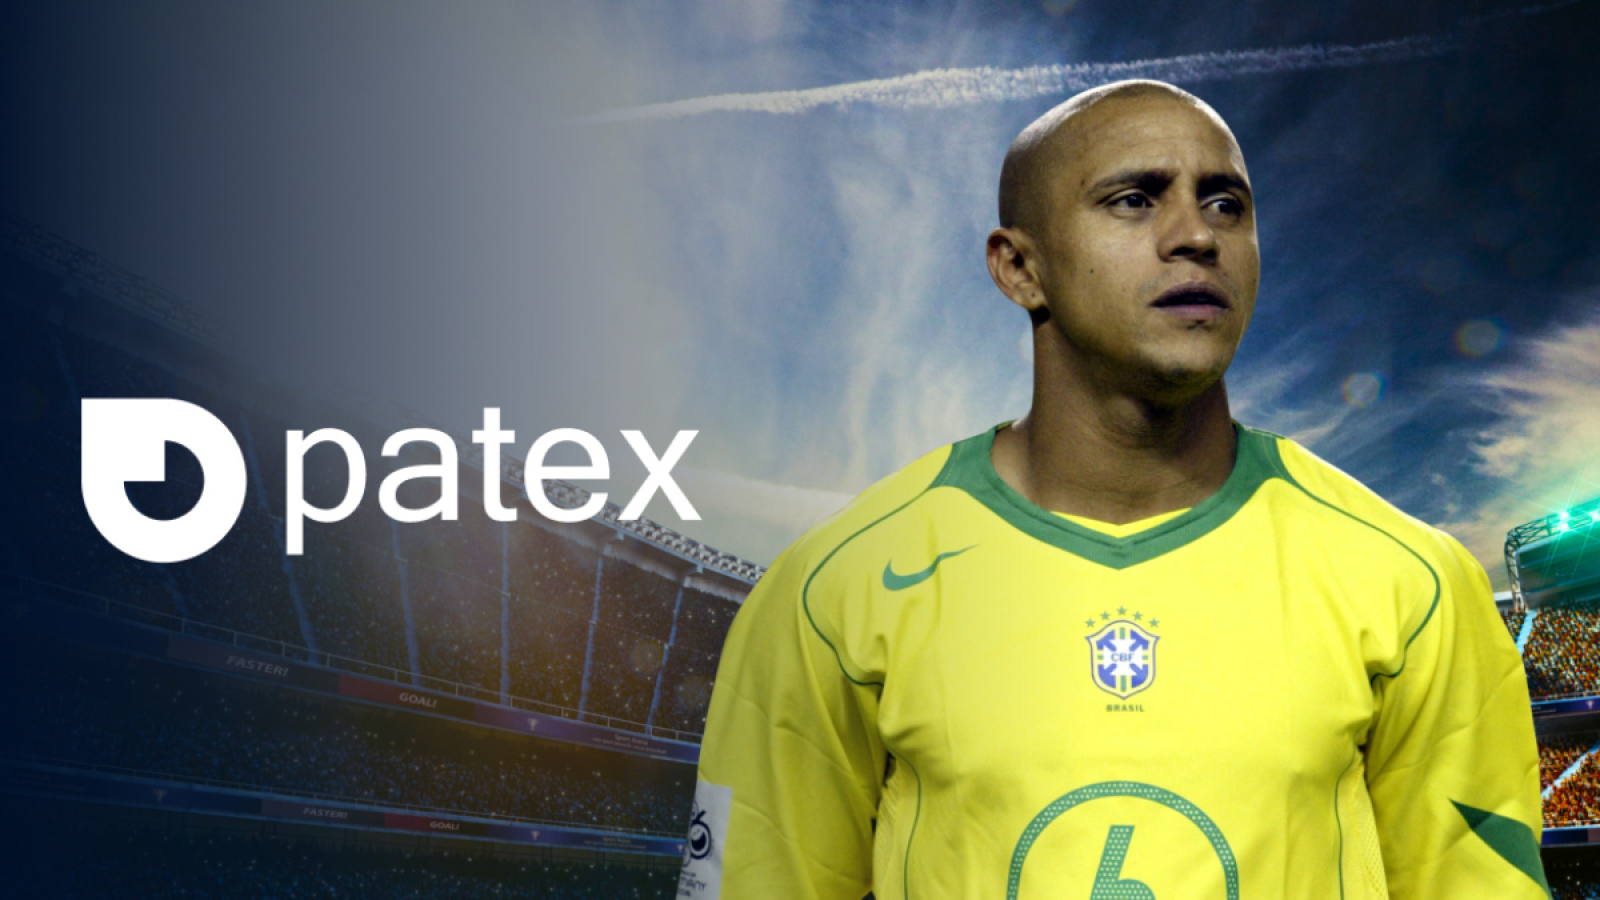 Latin American Blockchain Platform Patex Seals a Cooperation with Iconic Brazilian Footballer Roberto Carlos